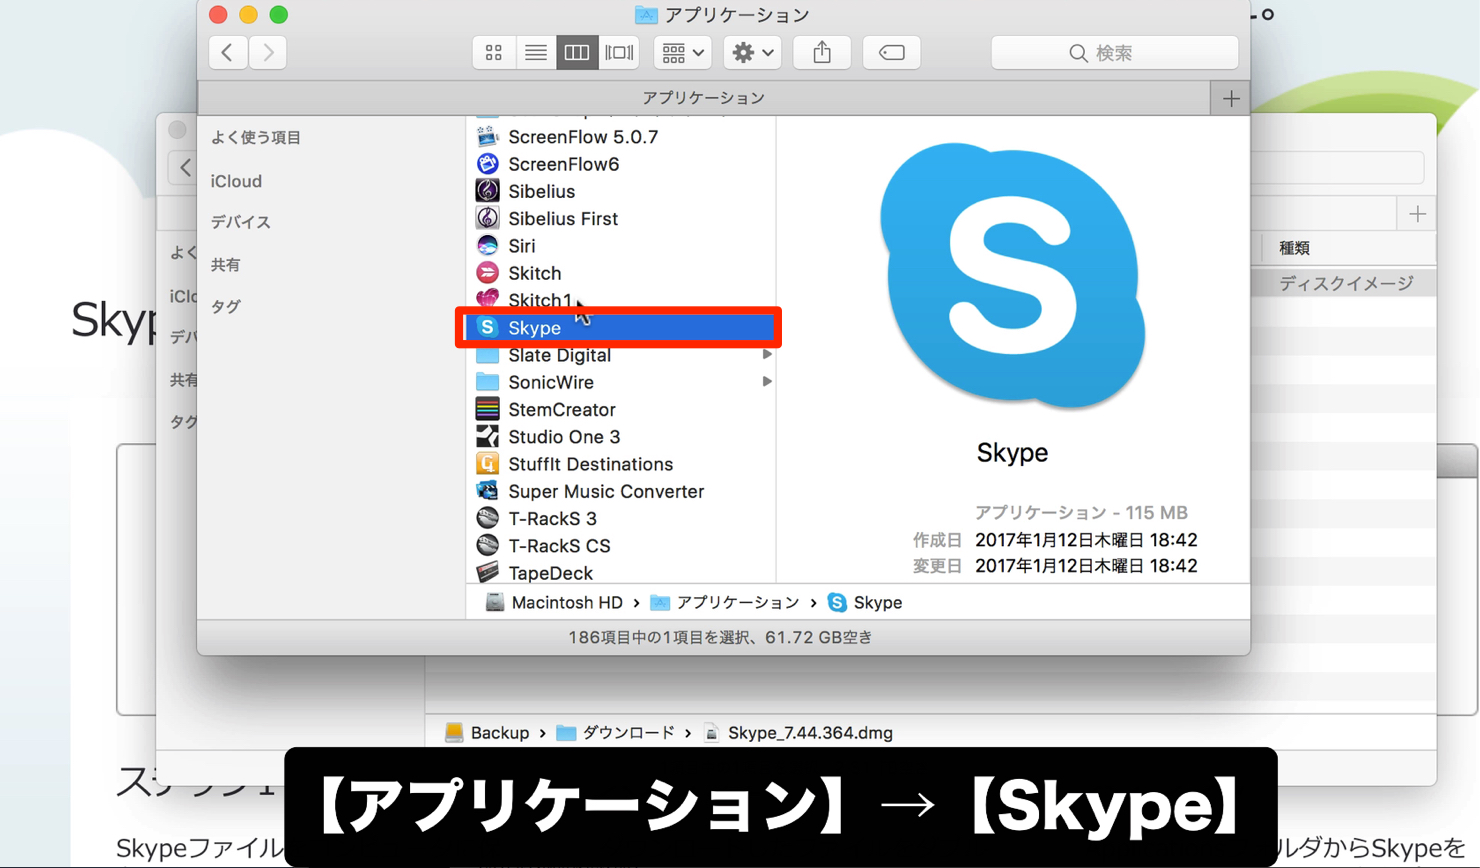 Skype Applications For Mac